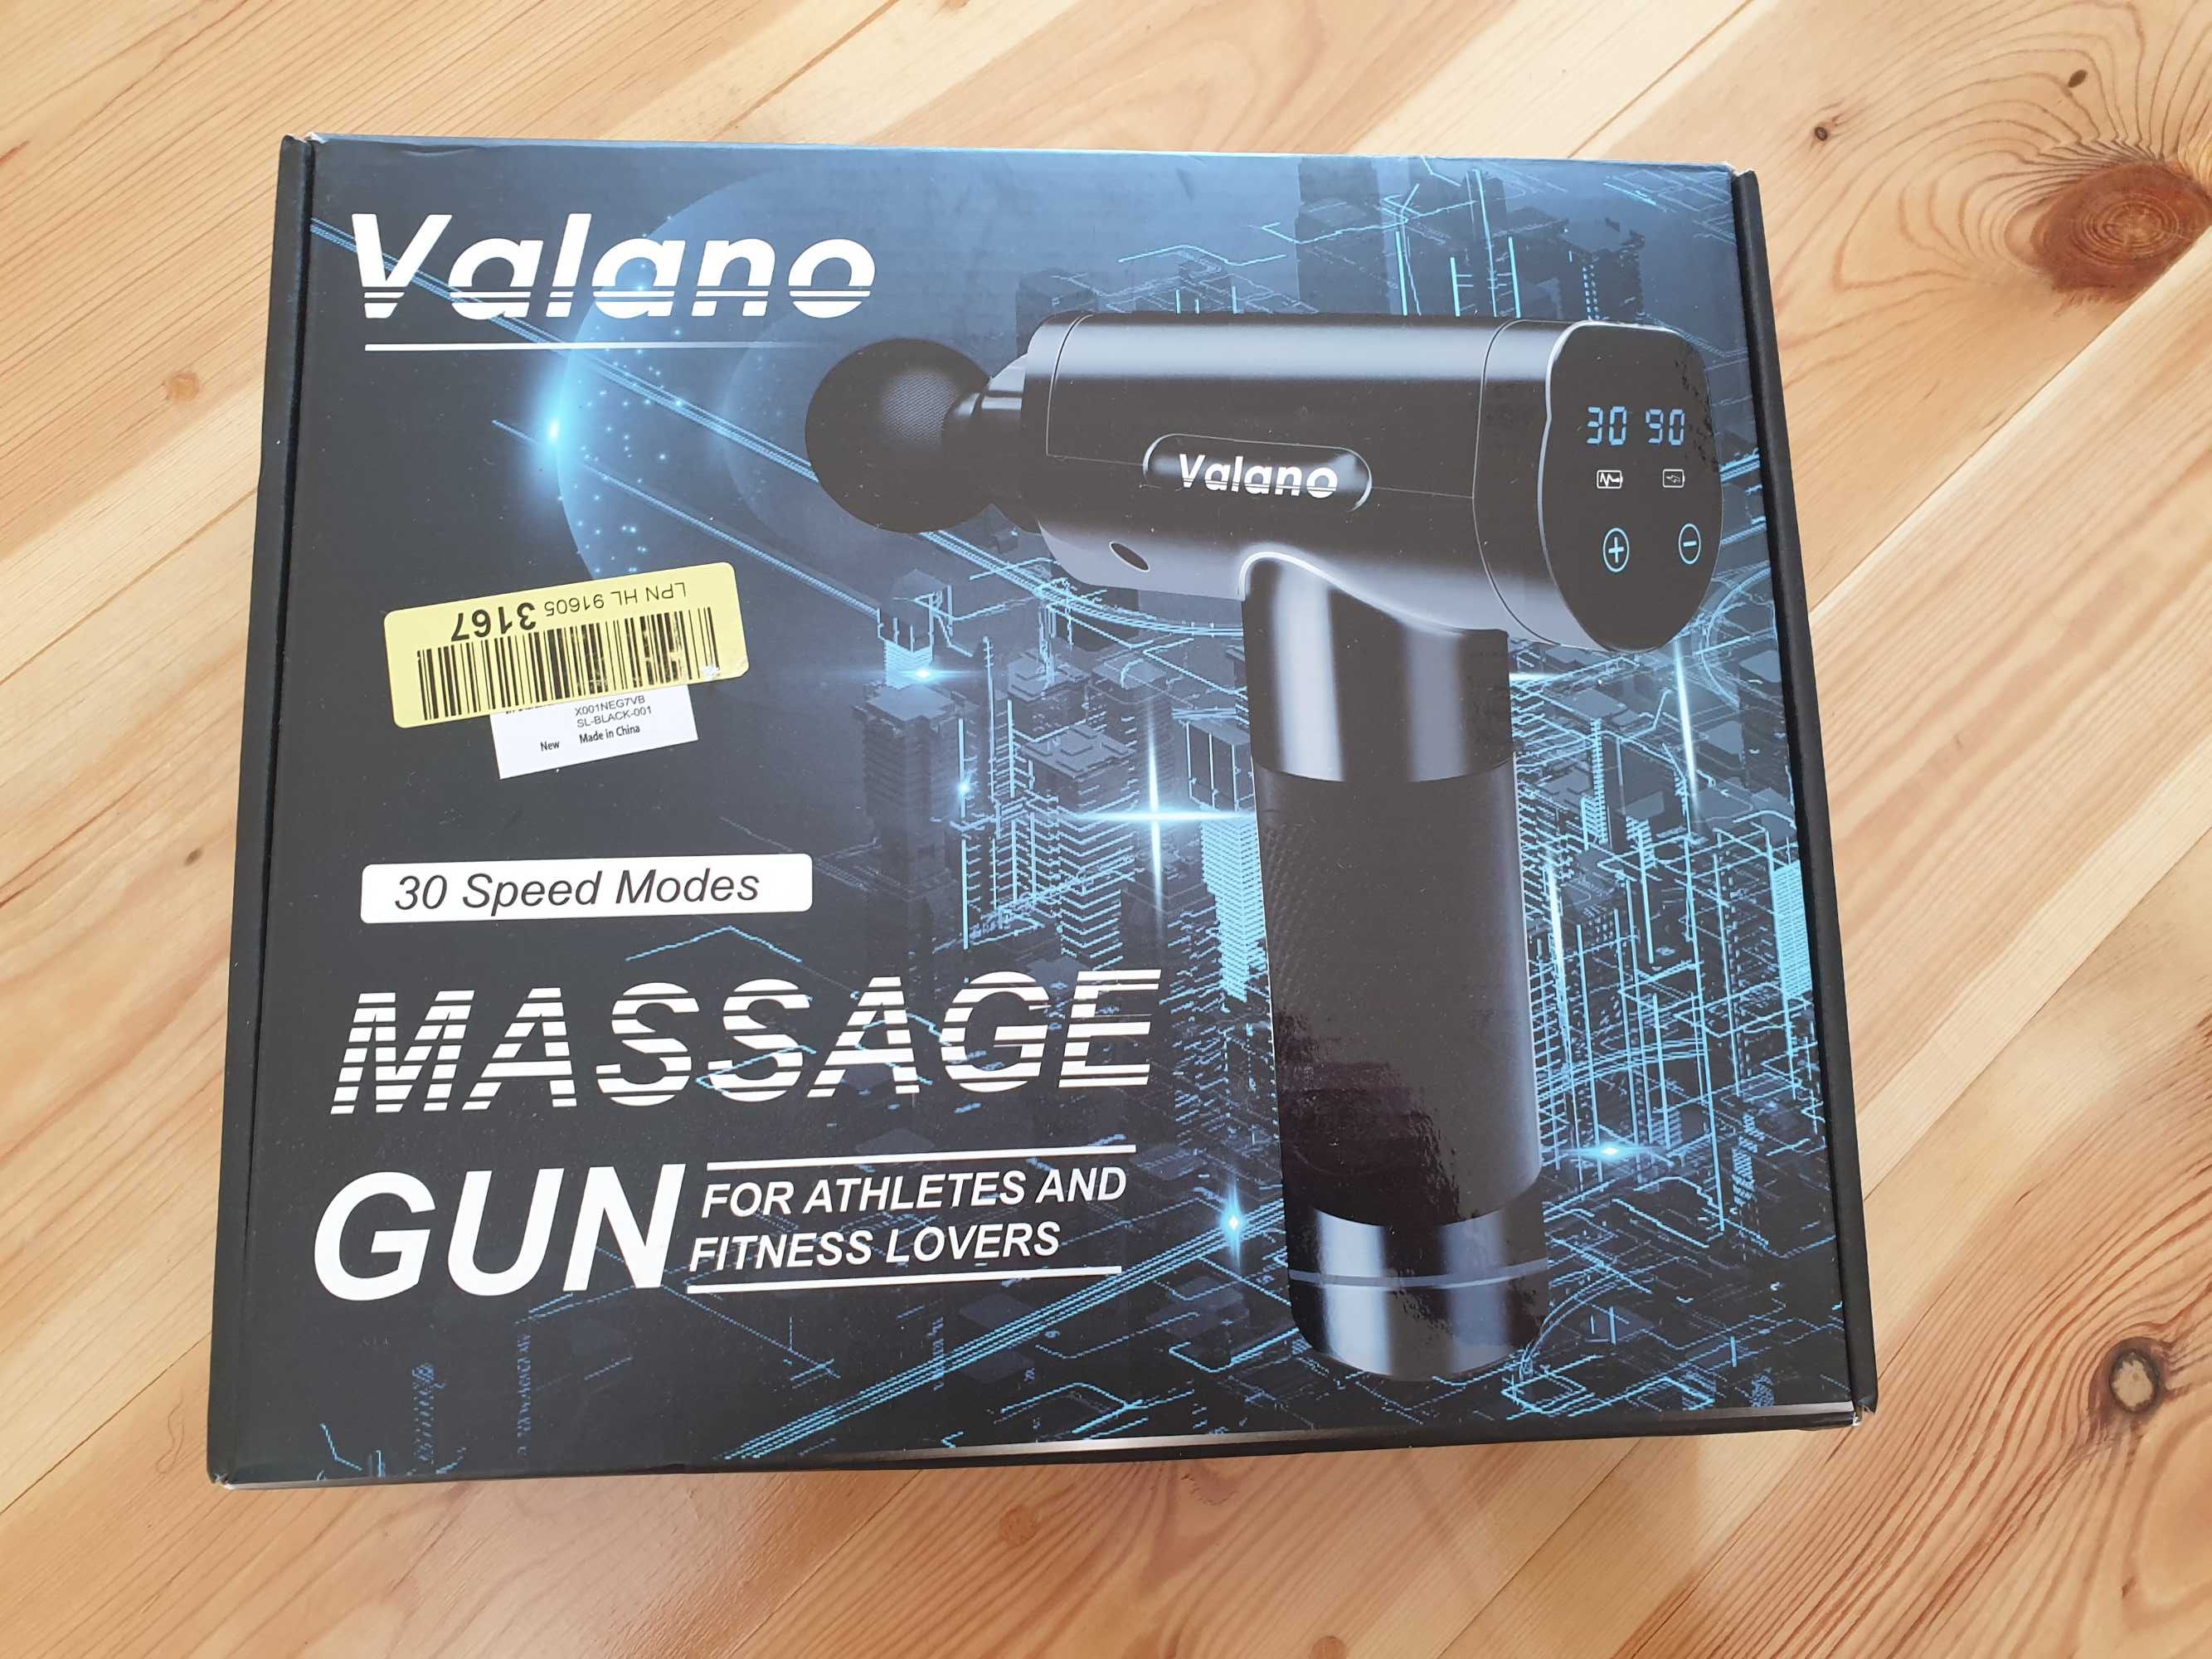 Pistolet do masażu Valano, 30 prędkości